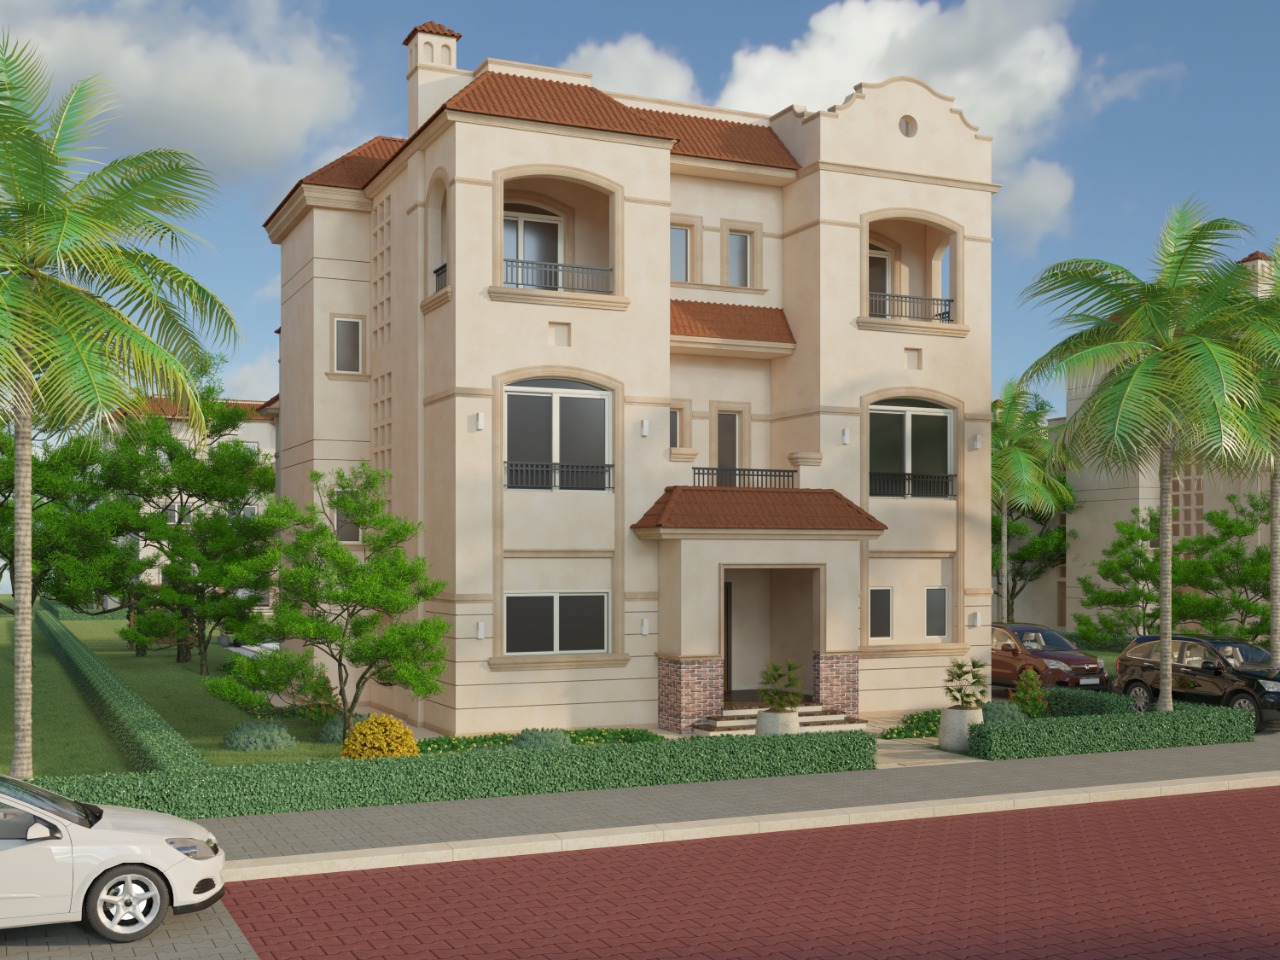 Construction of 4 villas in Durrat Al-Kerz 2 compound in Fifth Settlement